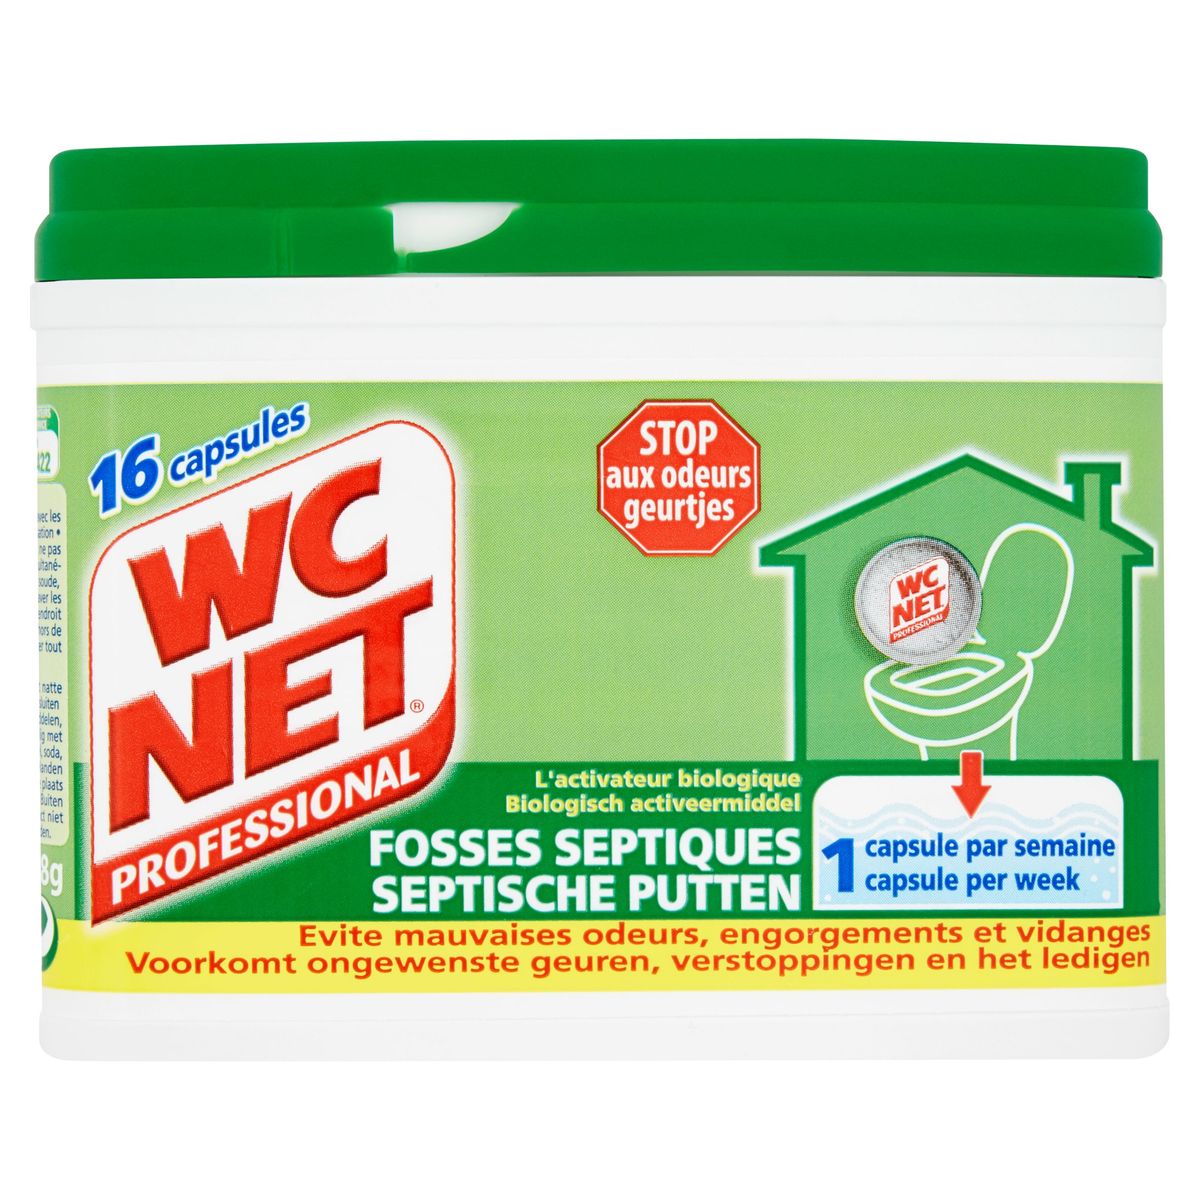 WC Net Professional Fosses Septiques 288 g